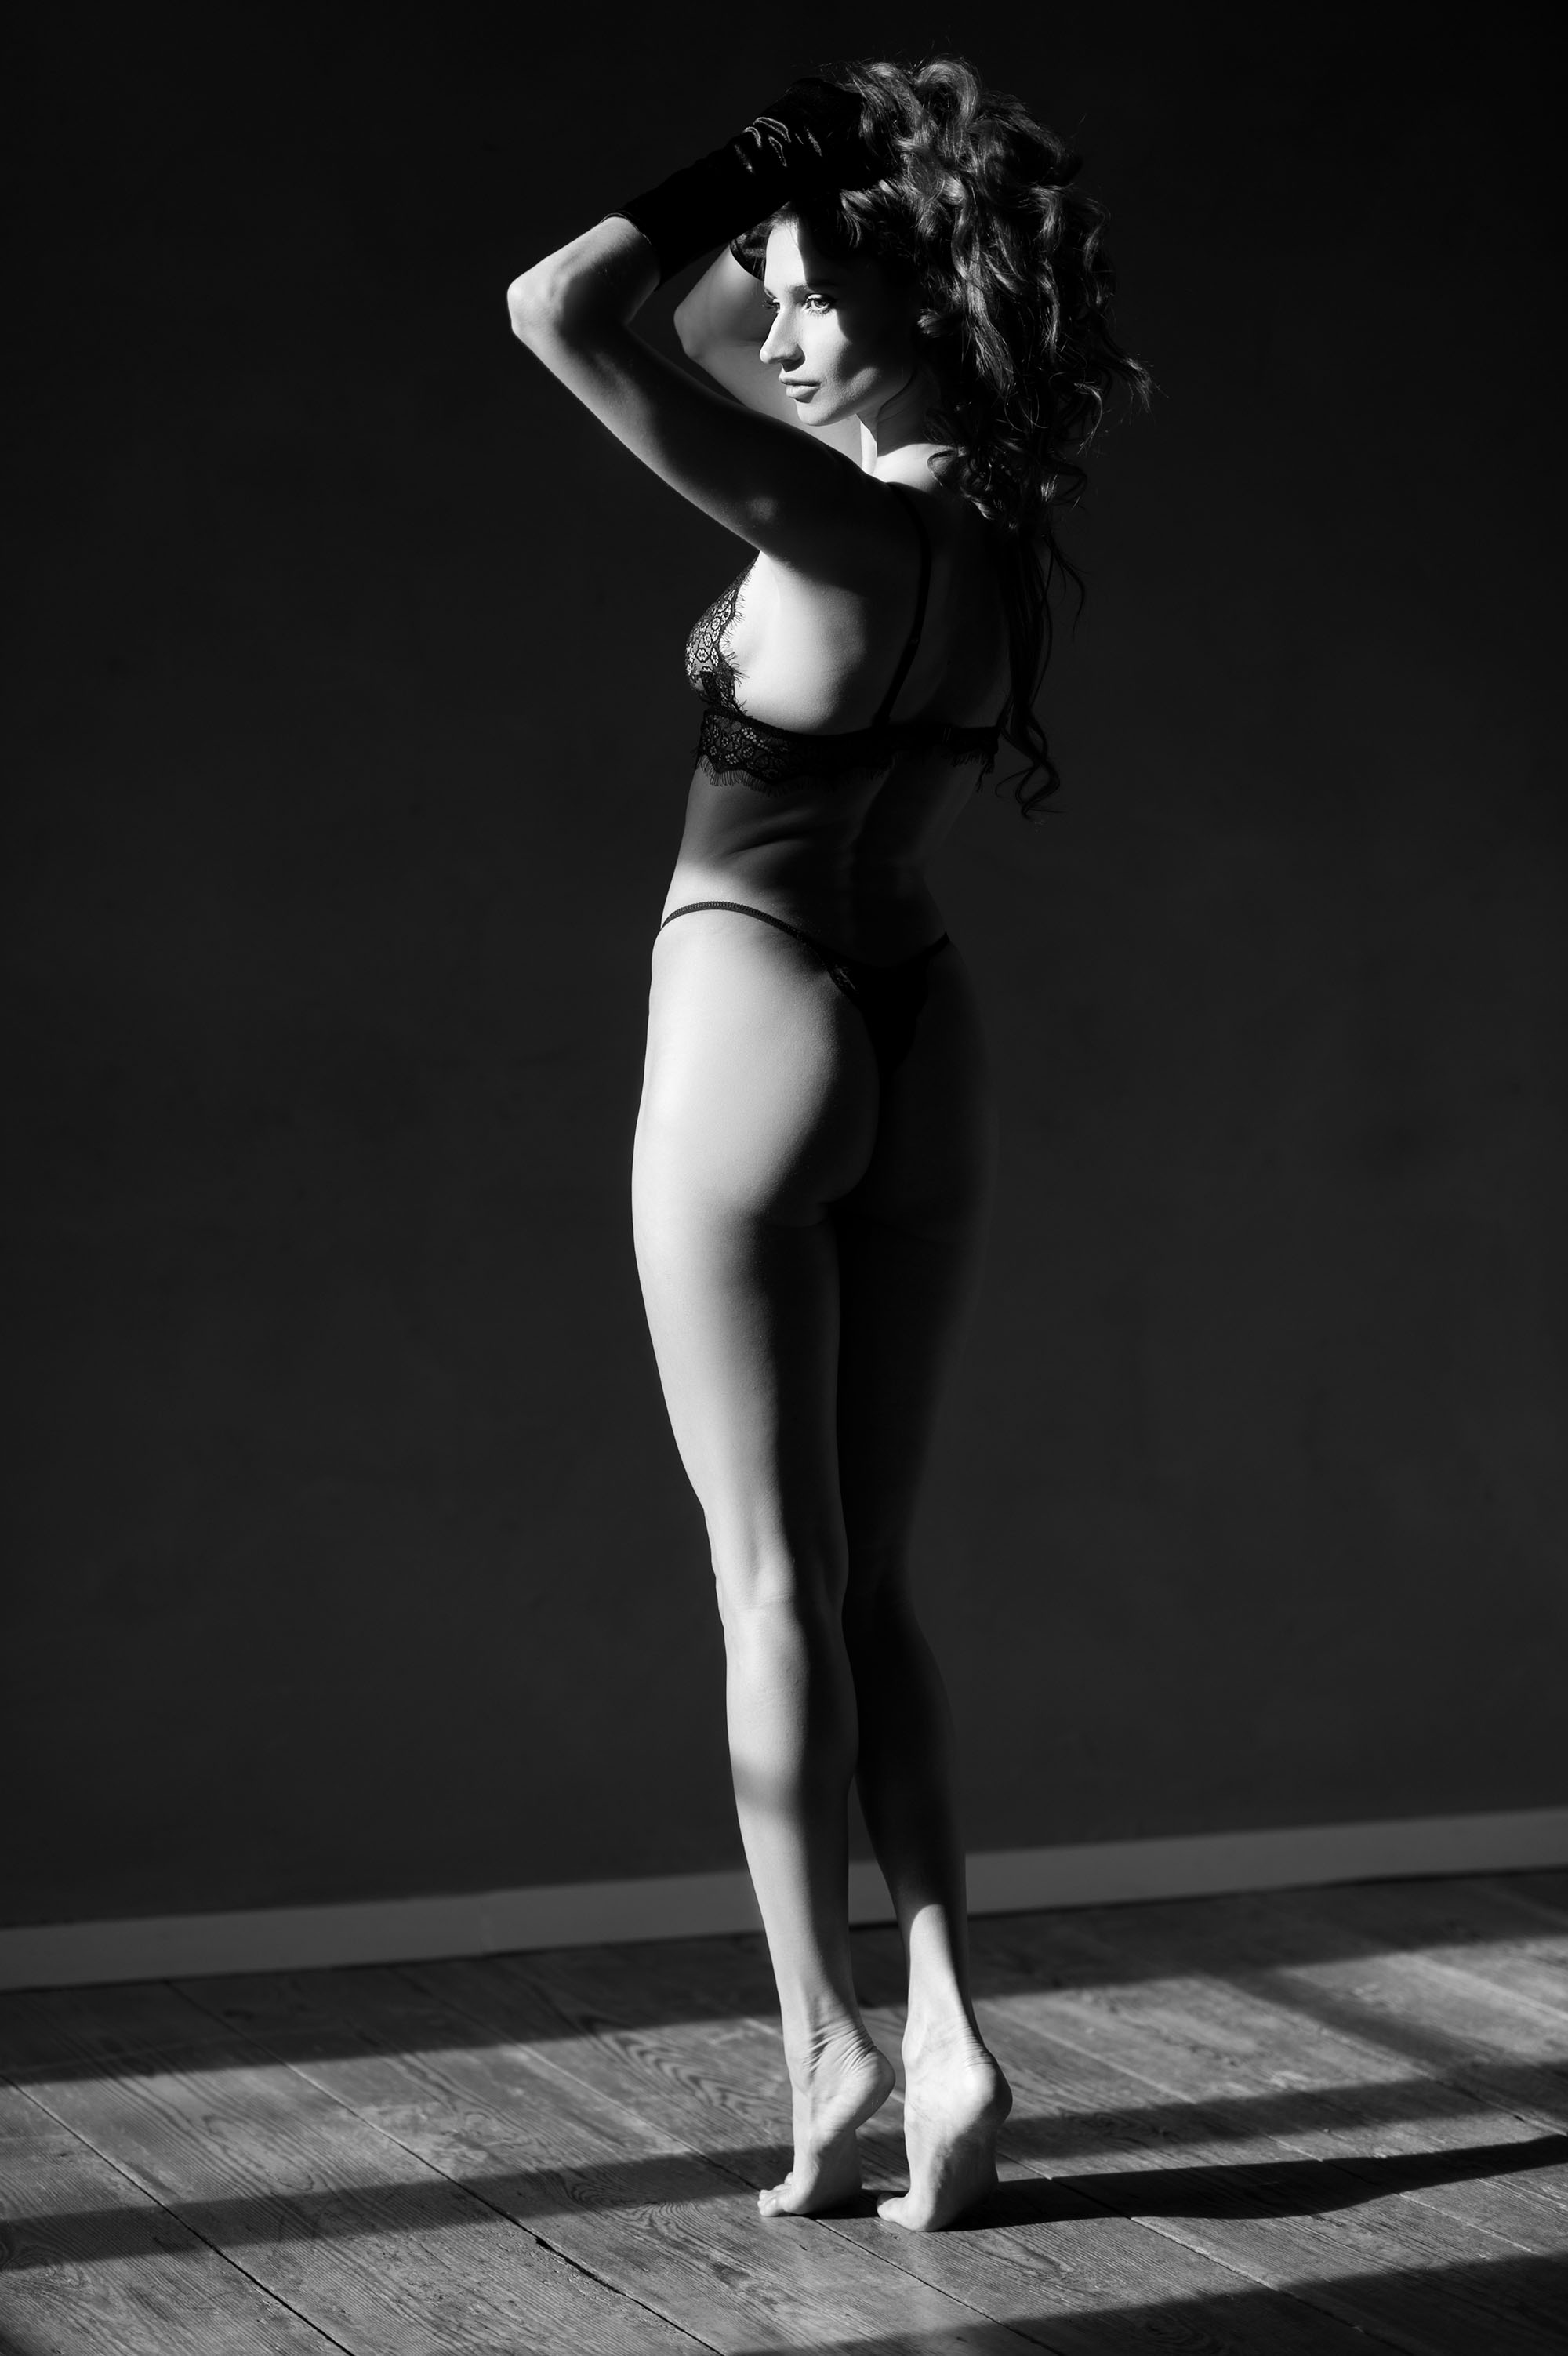 Ilvy Kokomo, model from Latvia at a boudoir photoshoot